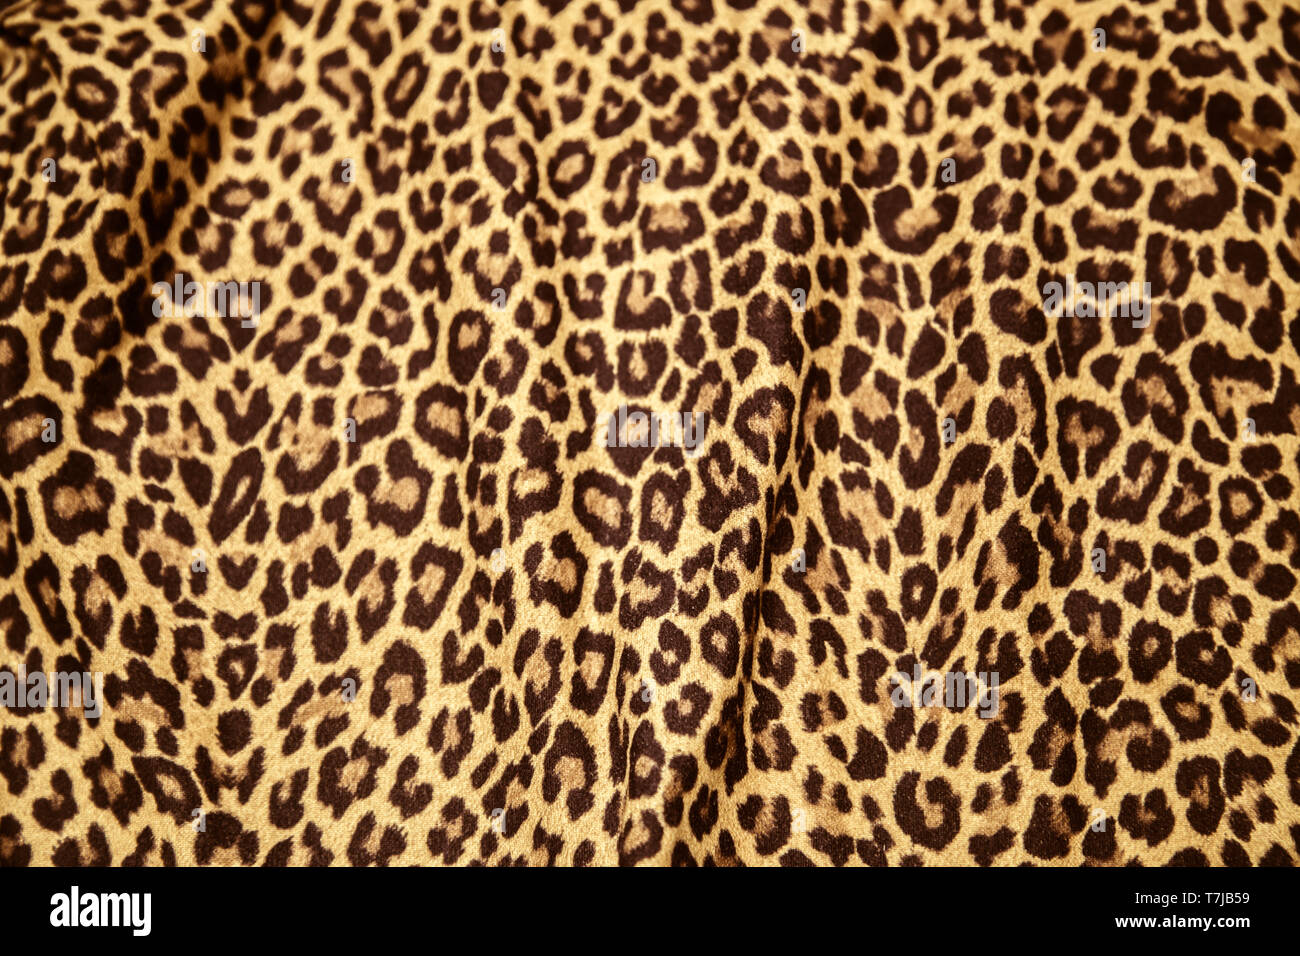 Leopard print picture Leopard print image cloth pattern texture Stock Photo  - Alamy